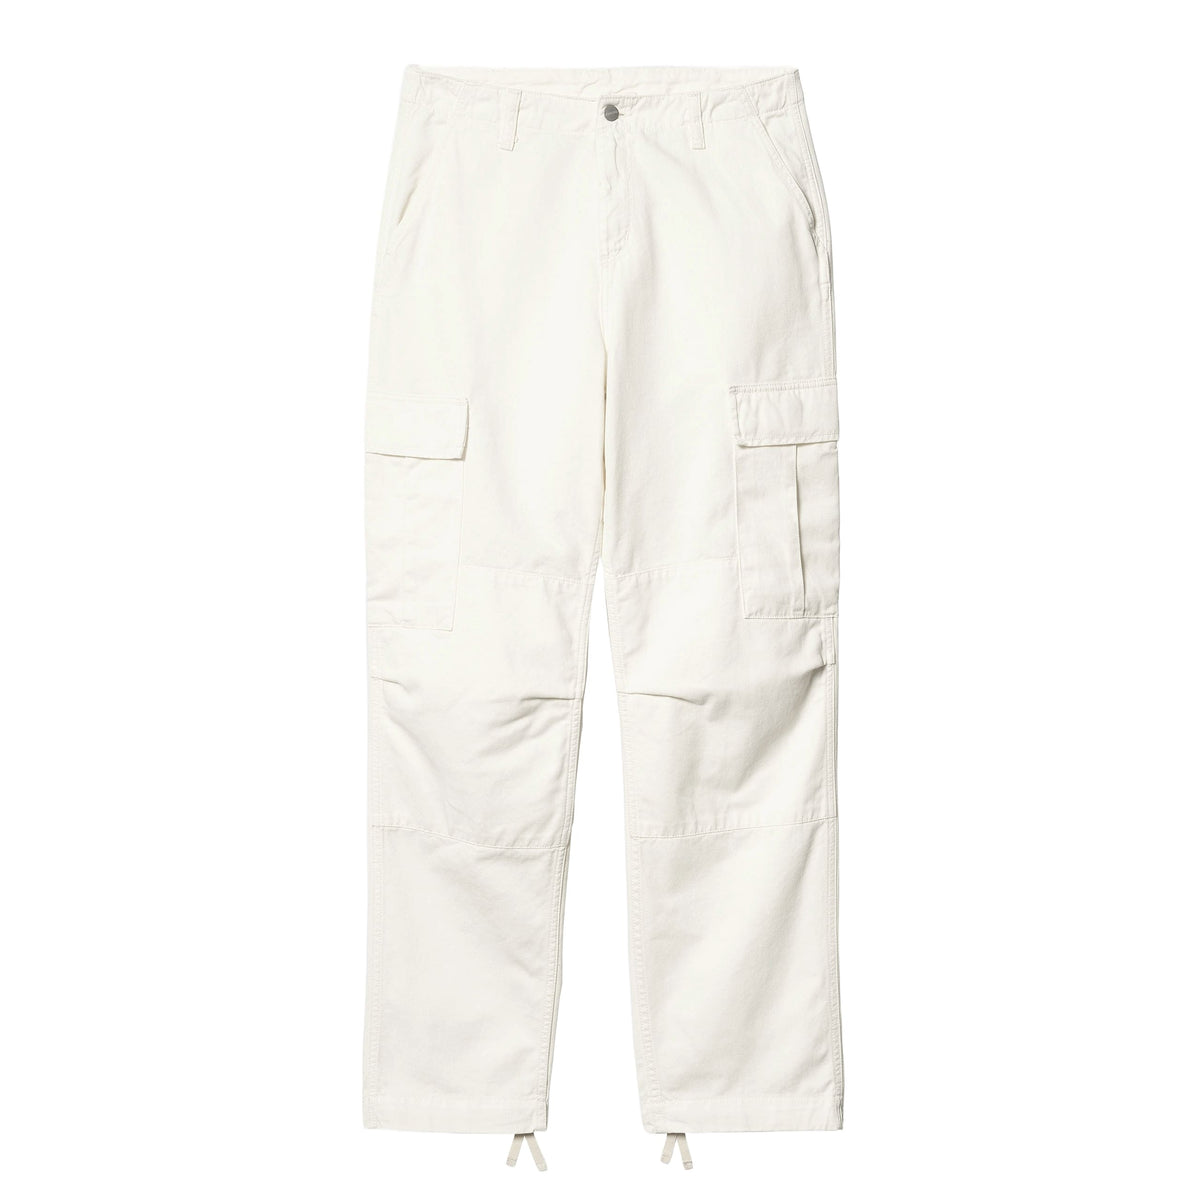 Carhartt Wip Men's Regular Cargo Pants With Big Pockets White